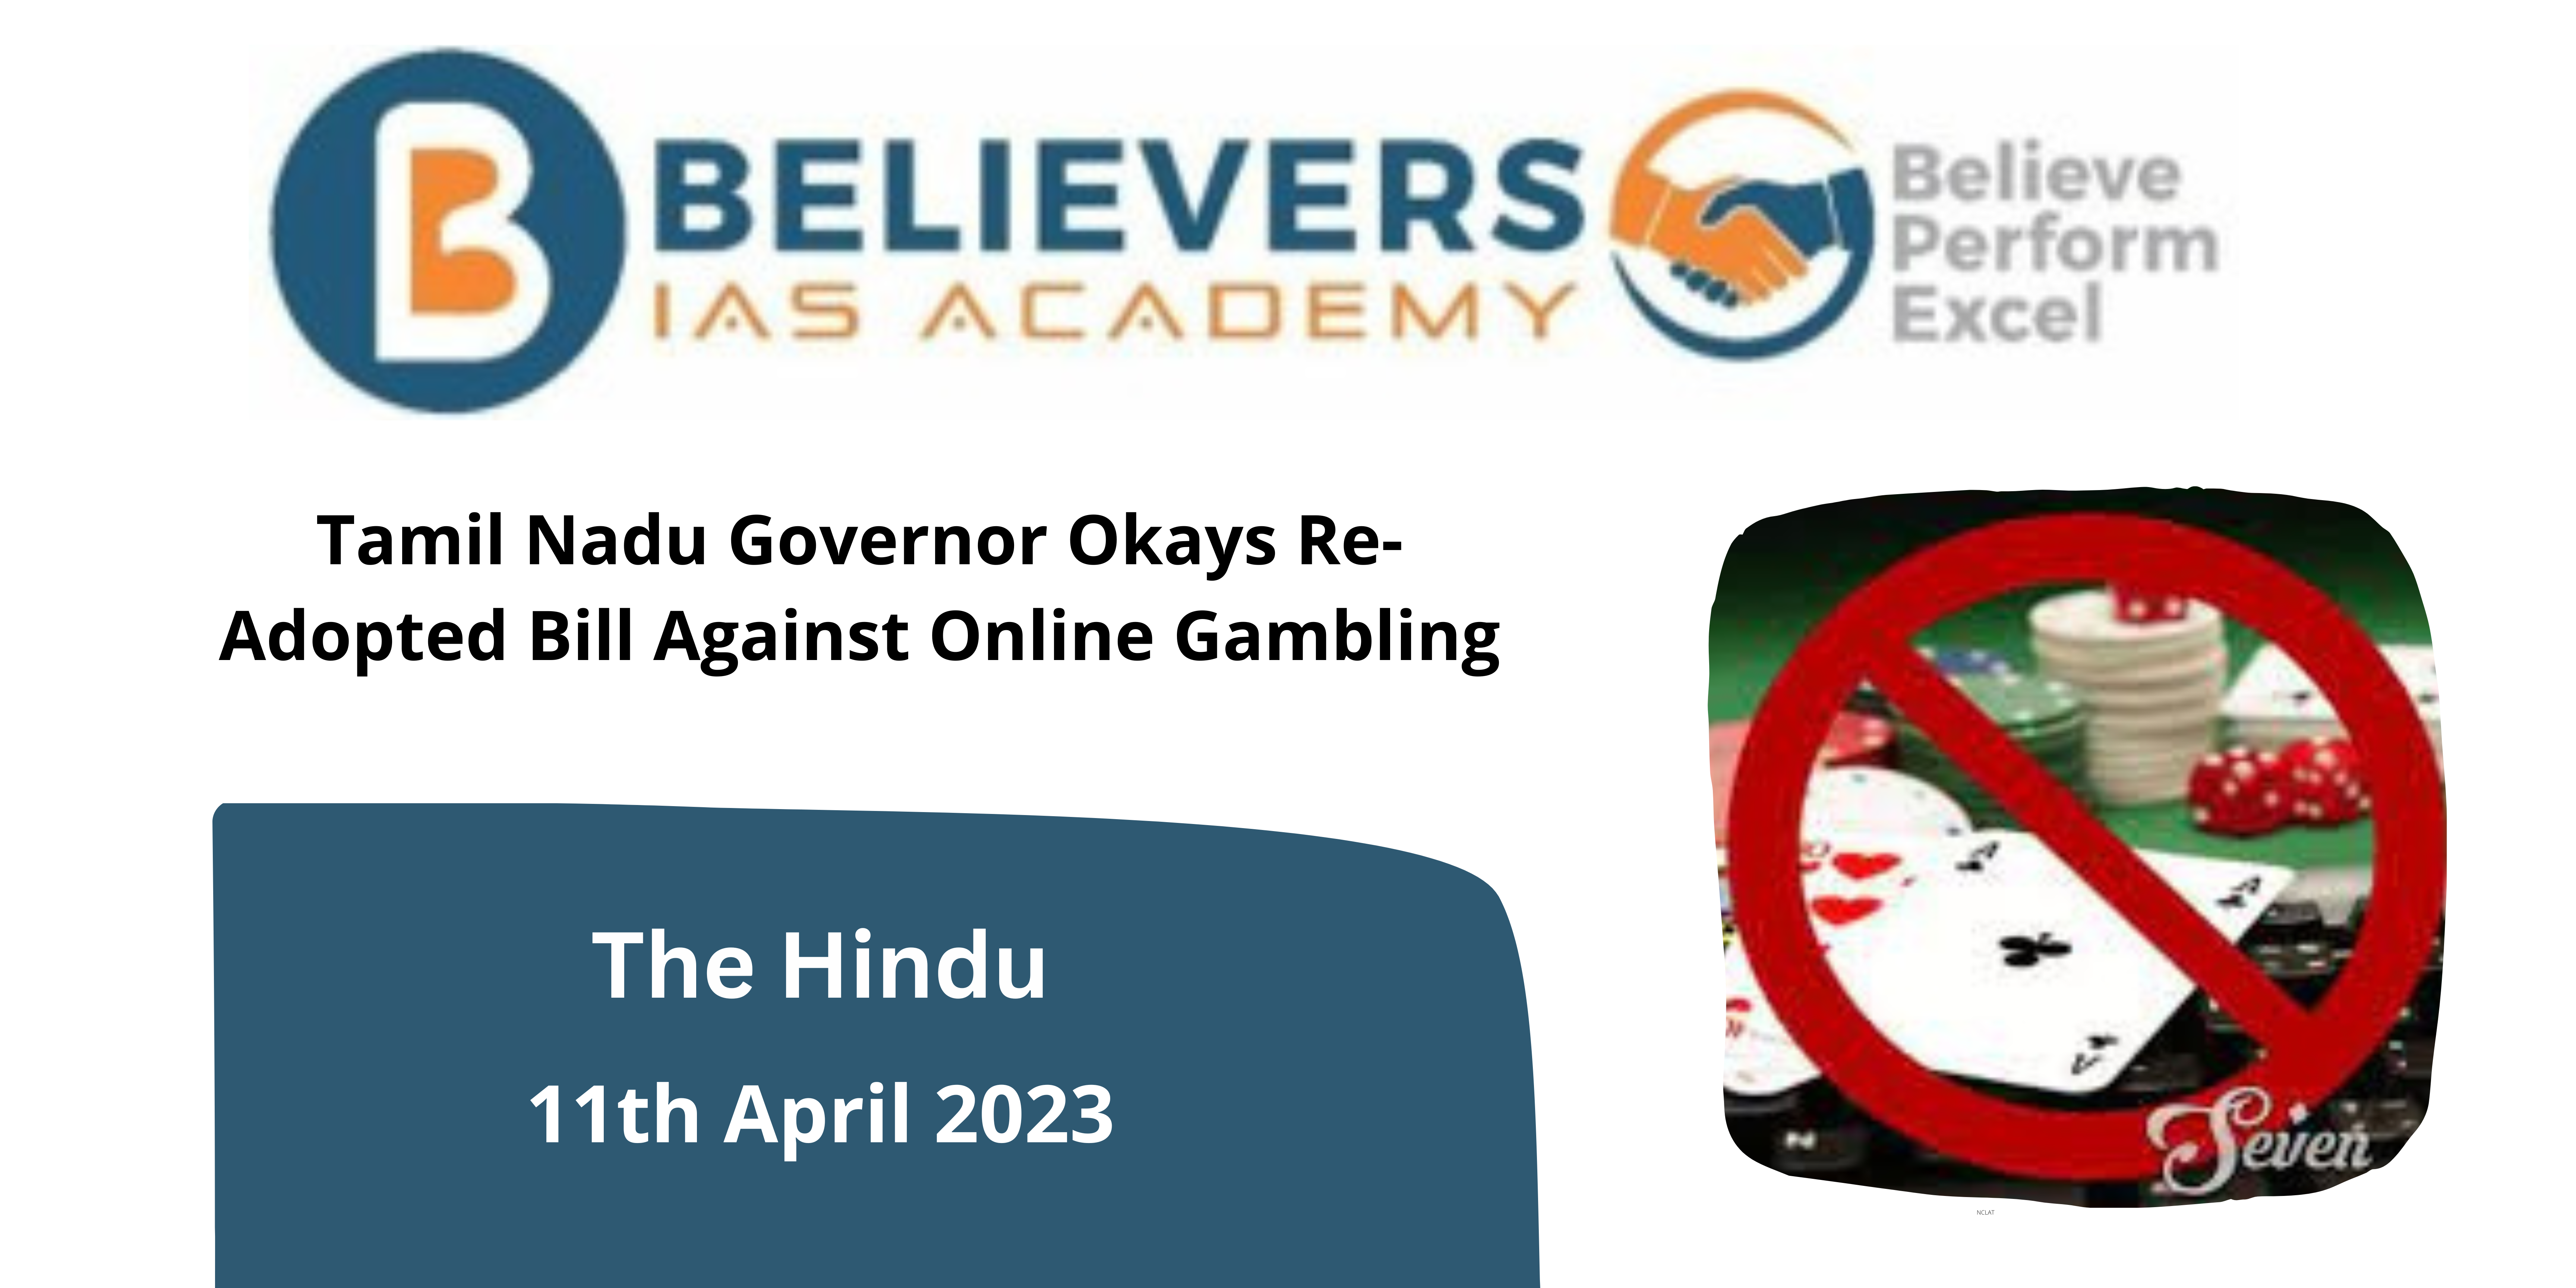 Tamil Nadu Governor Okays Re-Adopted Bill Against Online Gambling